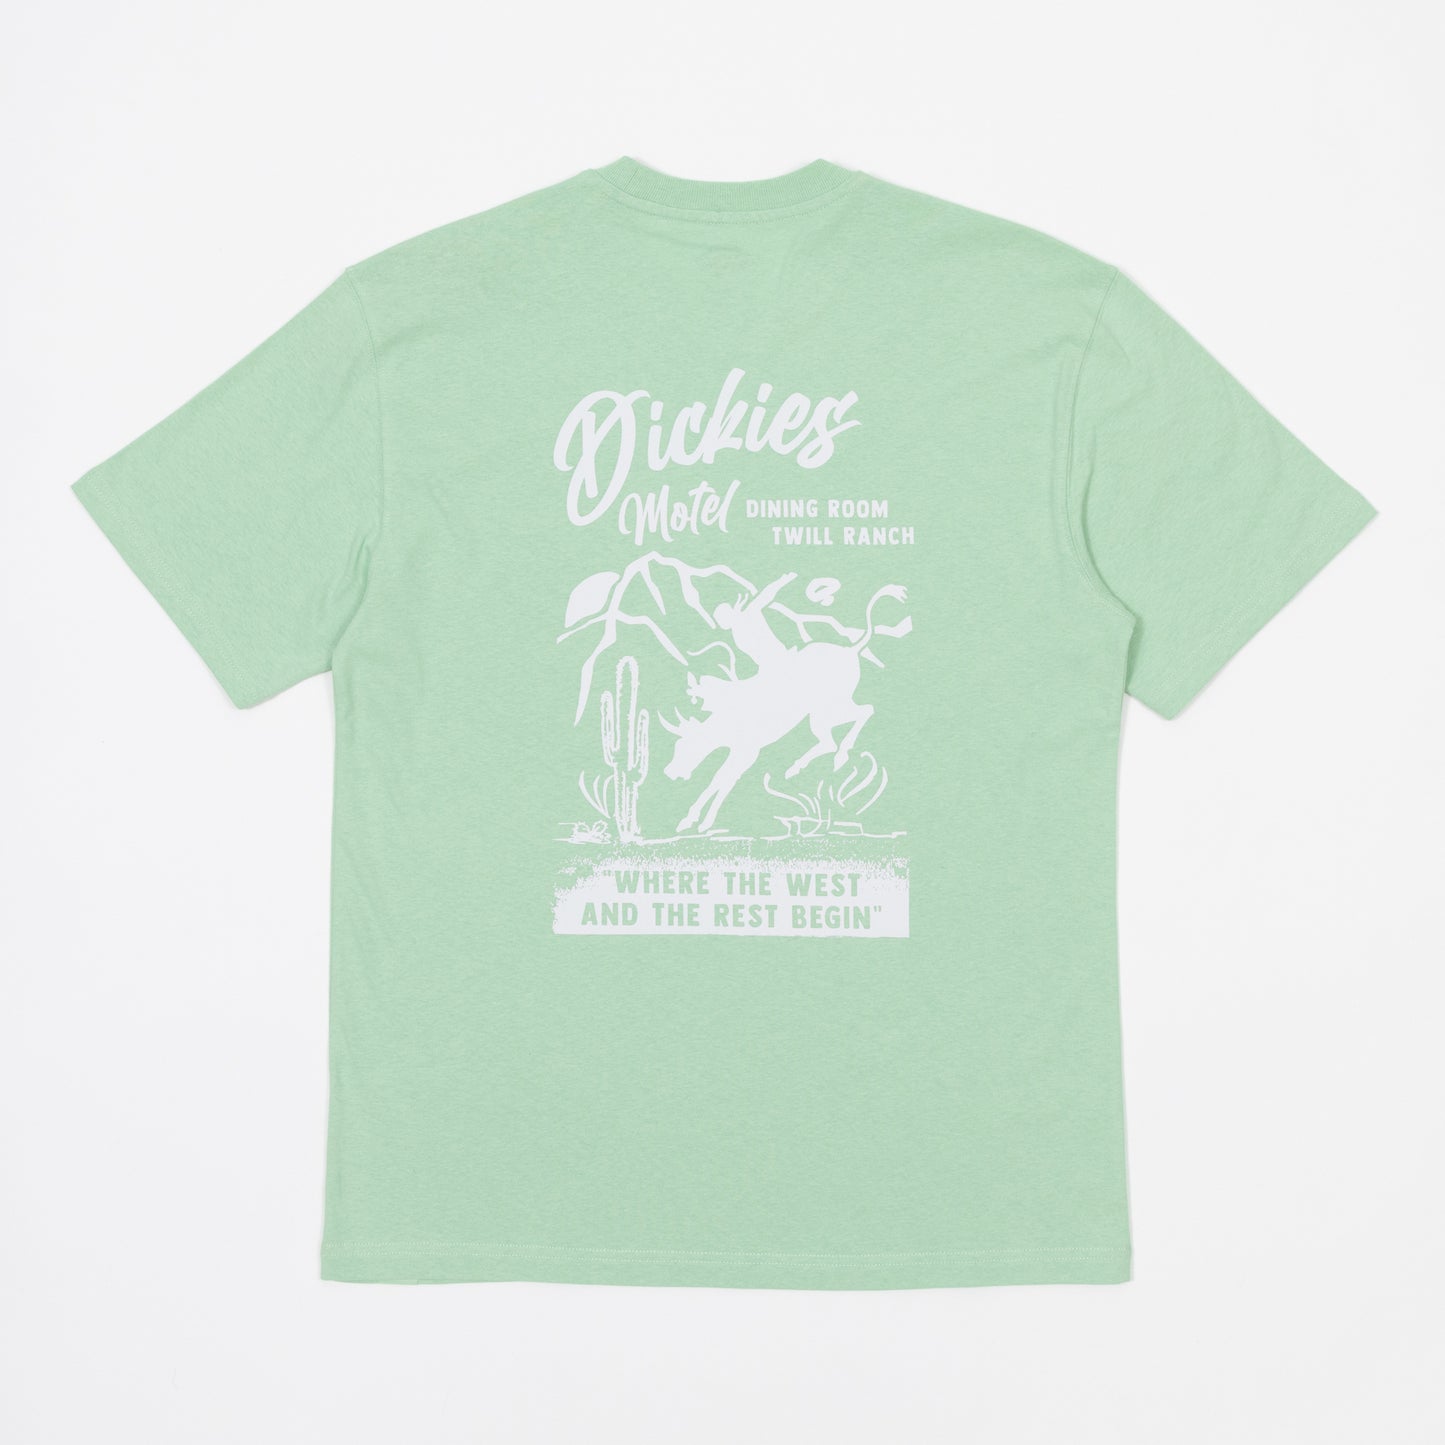 DICKIES Dighton T-Shirt in QUIET GREEN